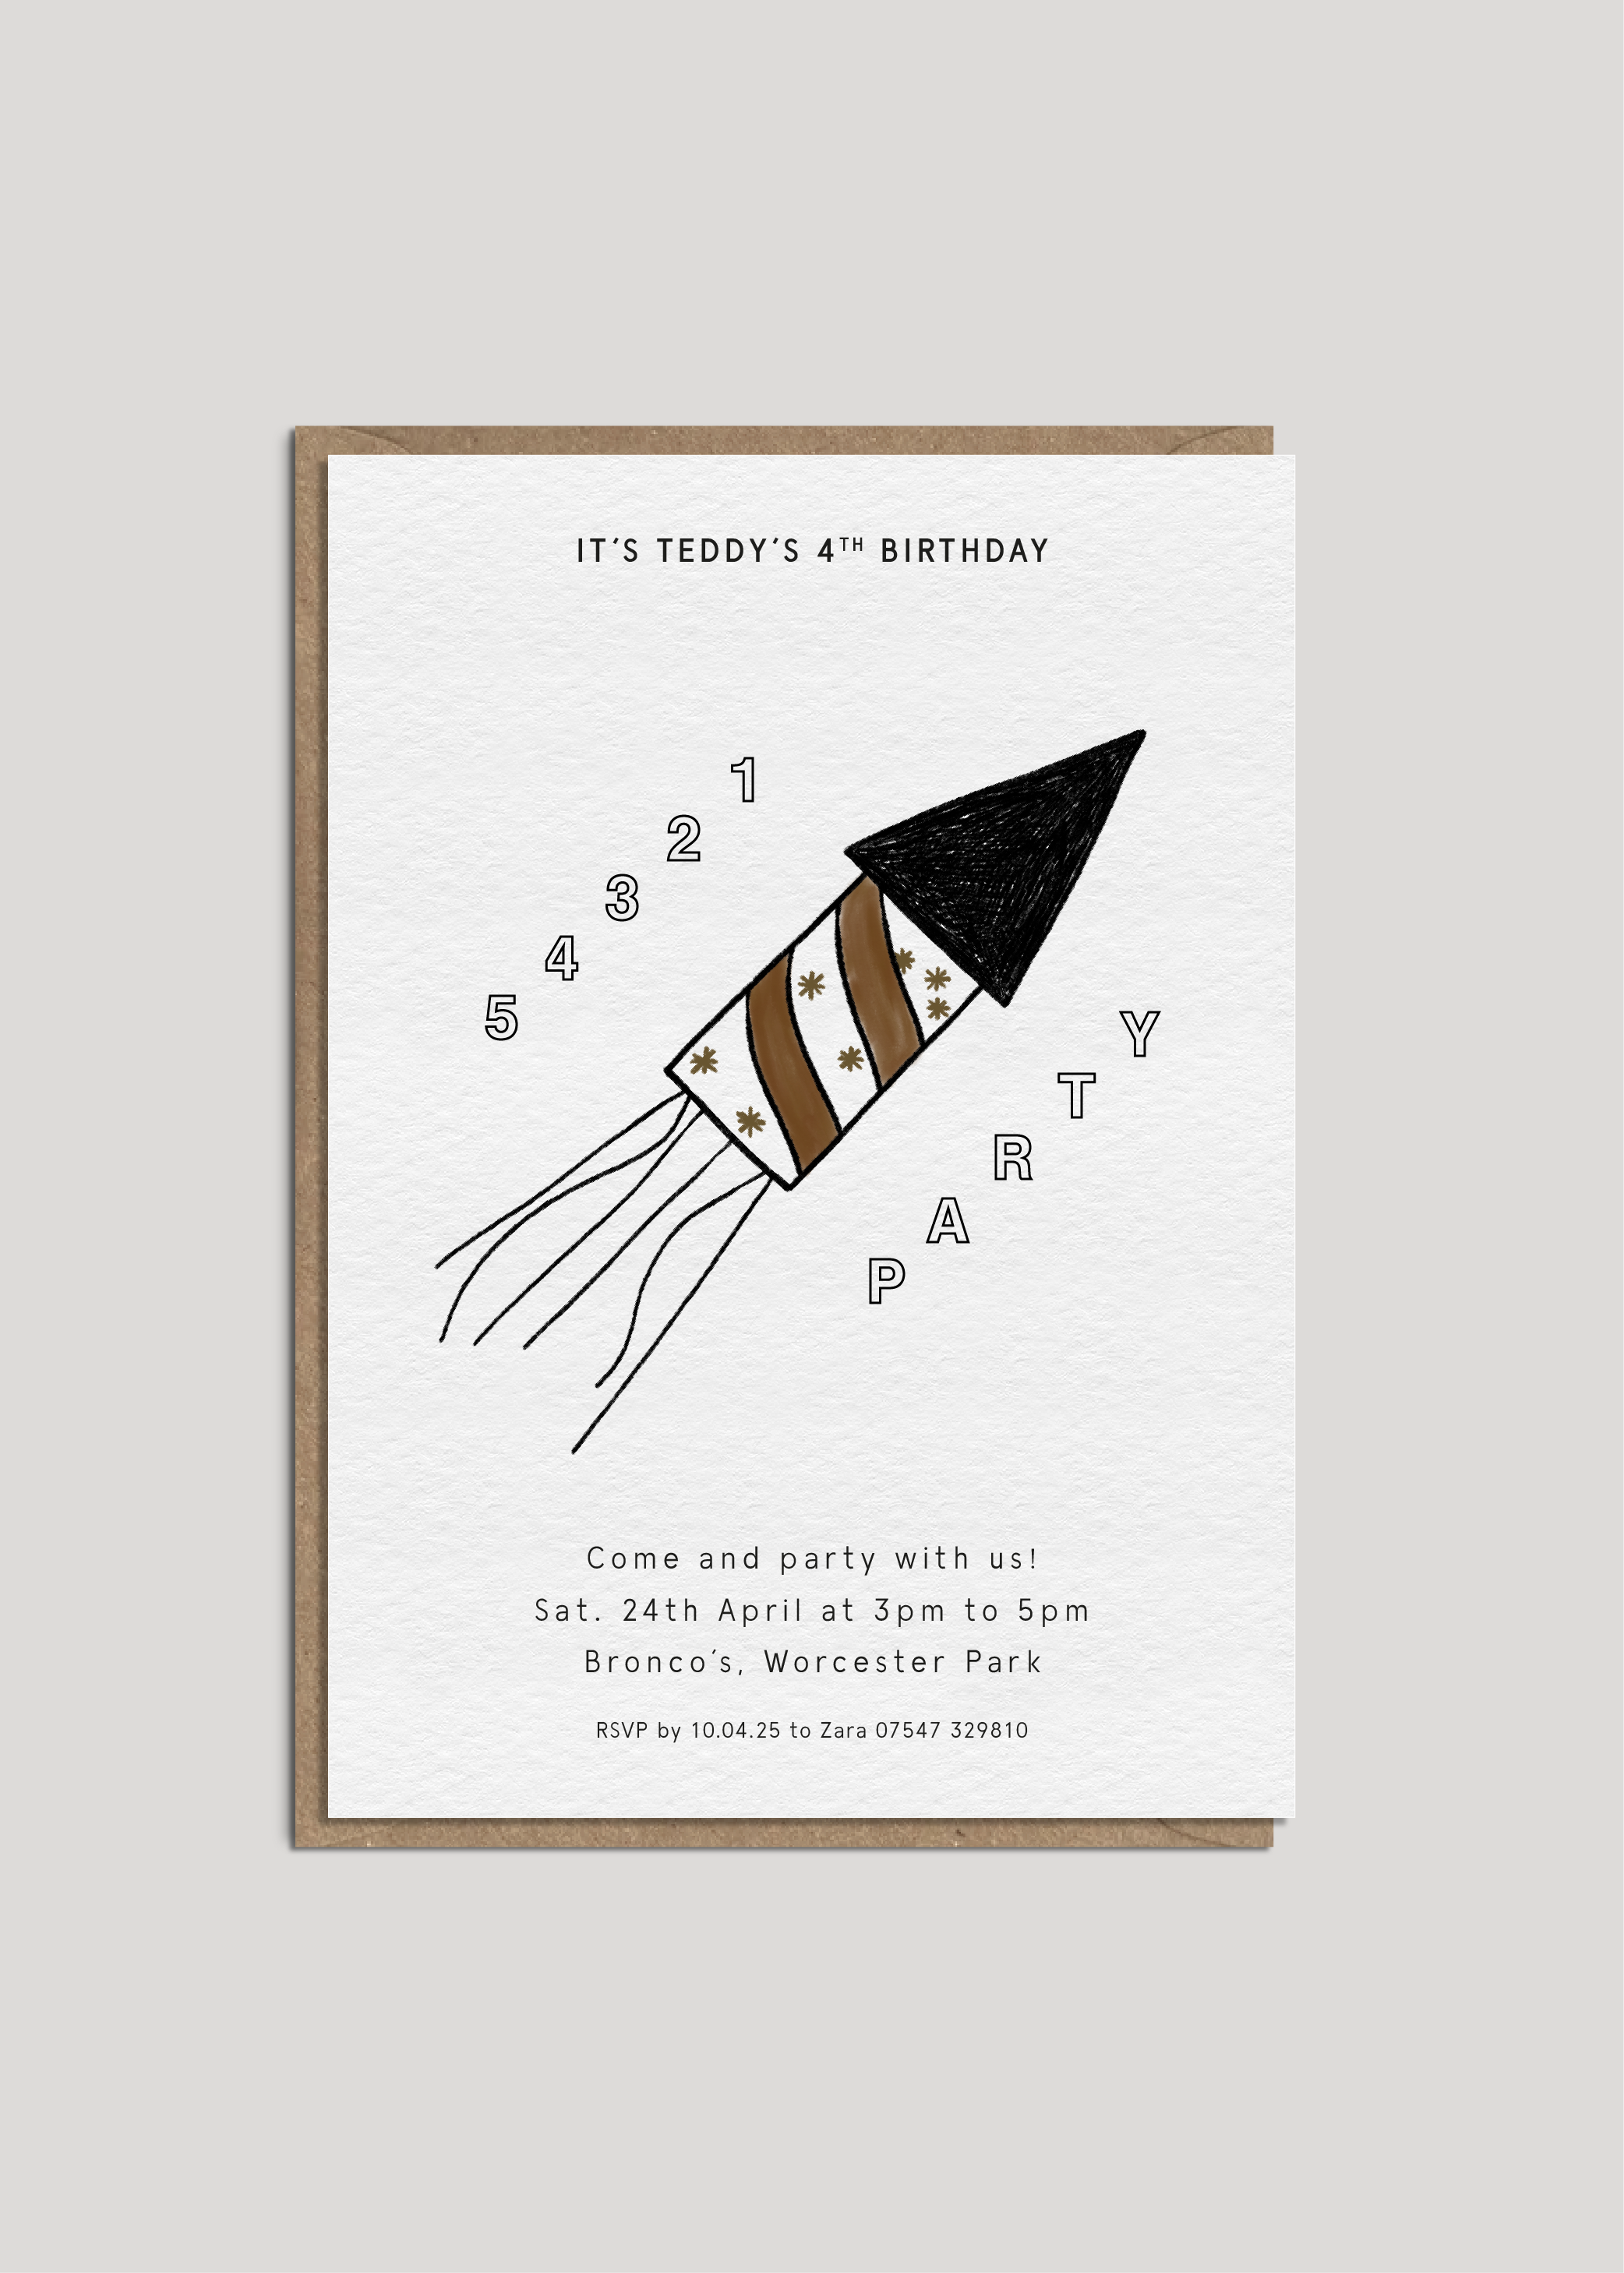 Teddy's Rocket Party Invites — Printed